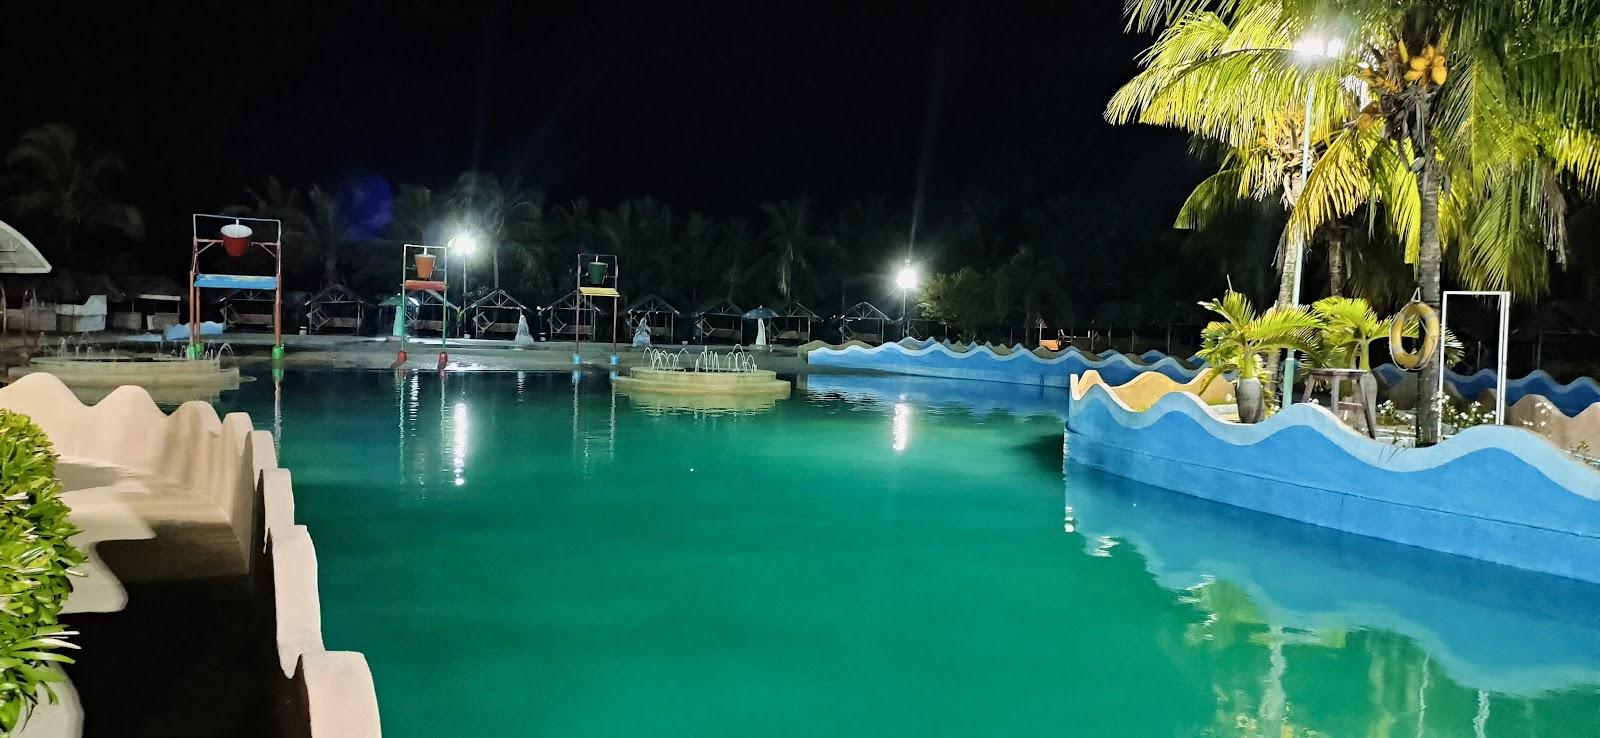 Sandee - Moonbay Marina Caribbean Waterpark And Resort